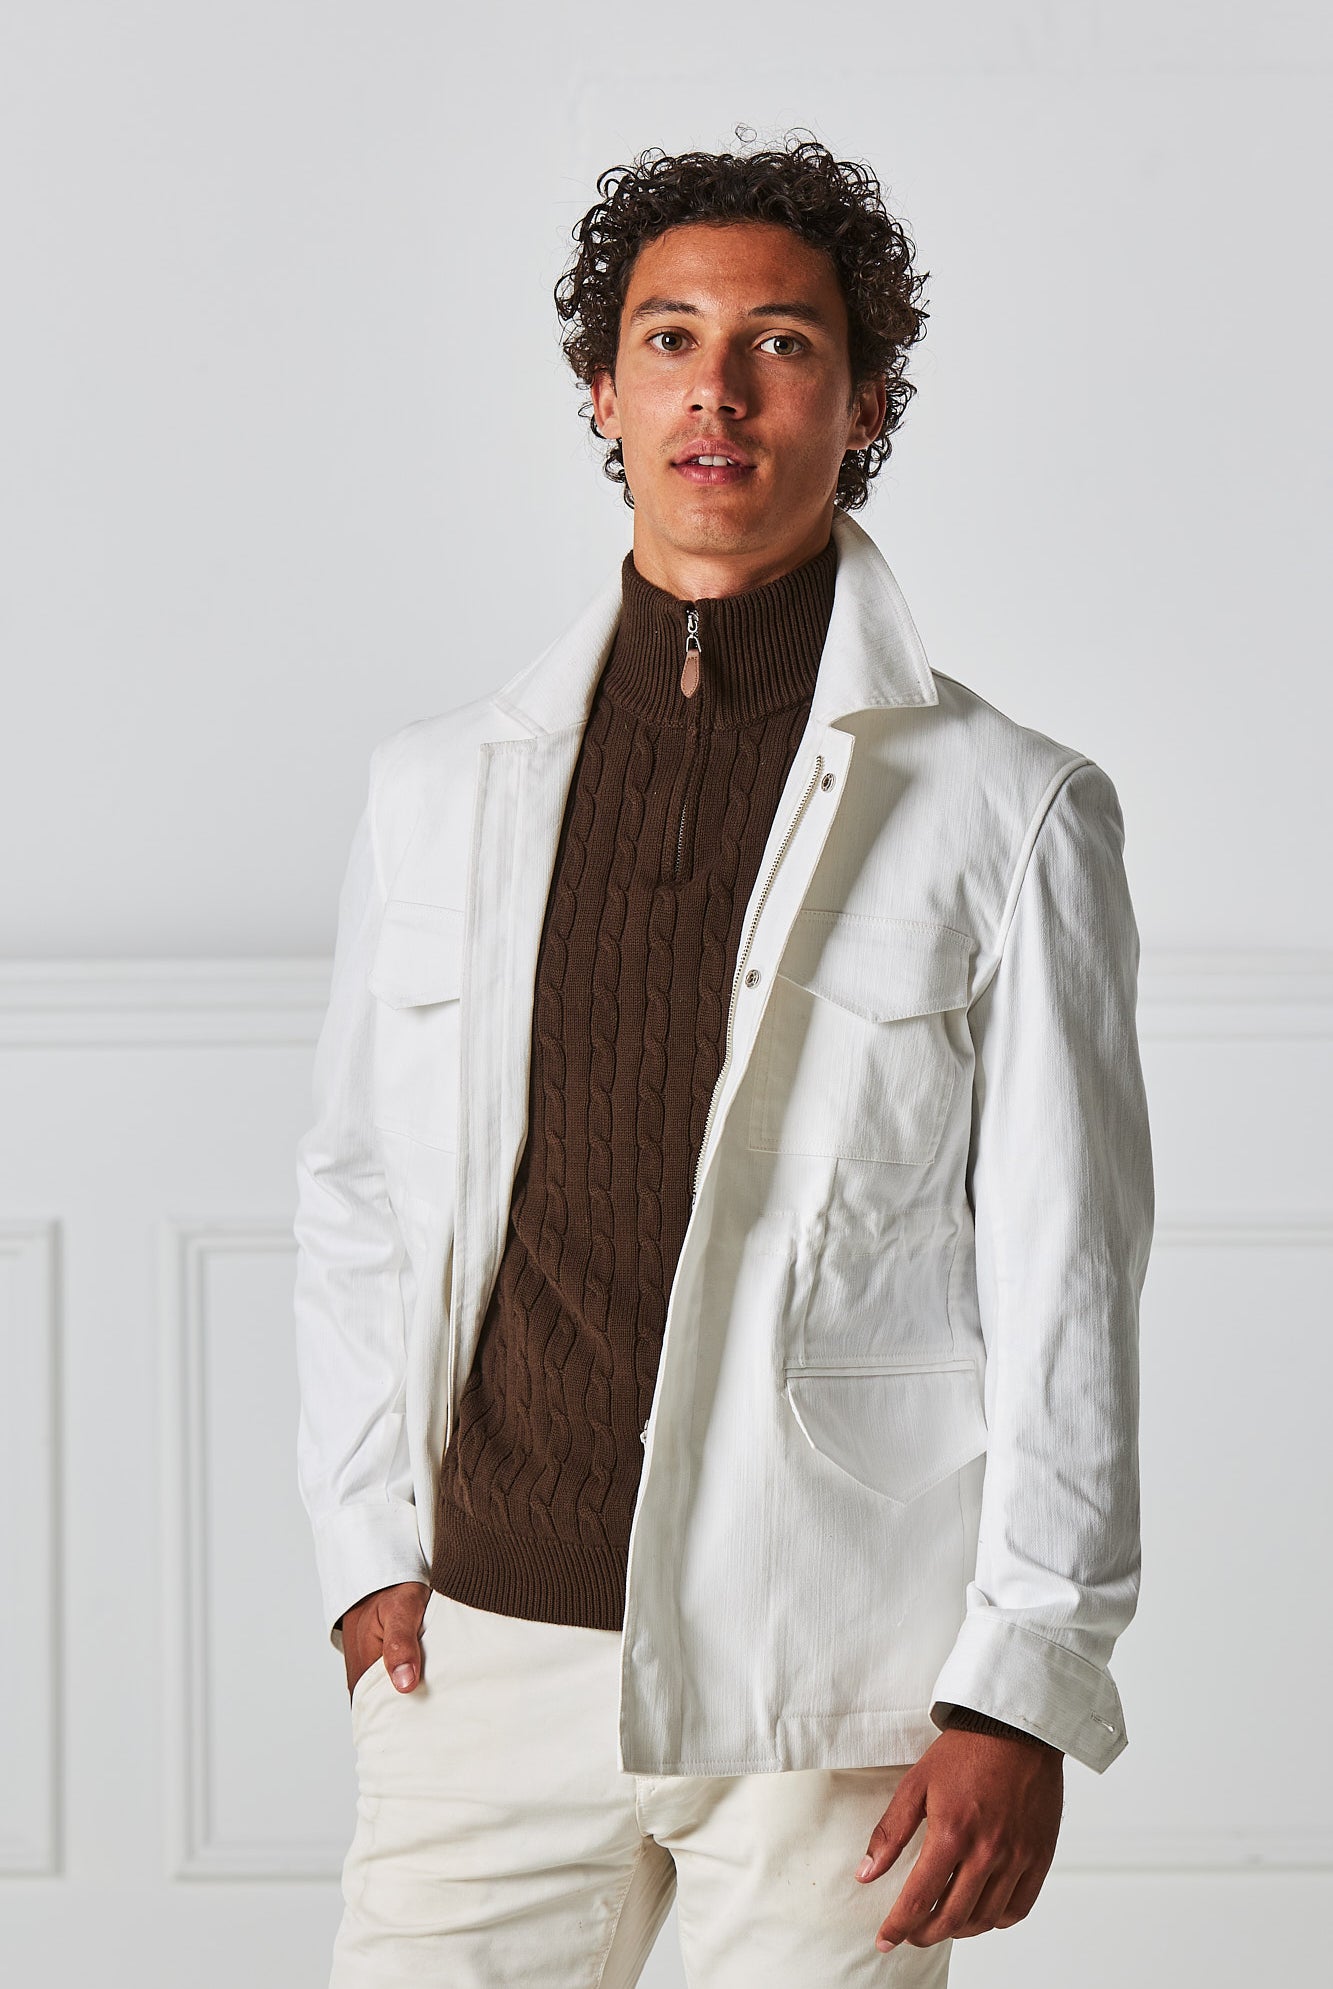 brun knit med hvid jakke